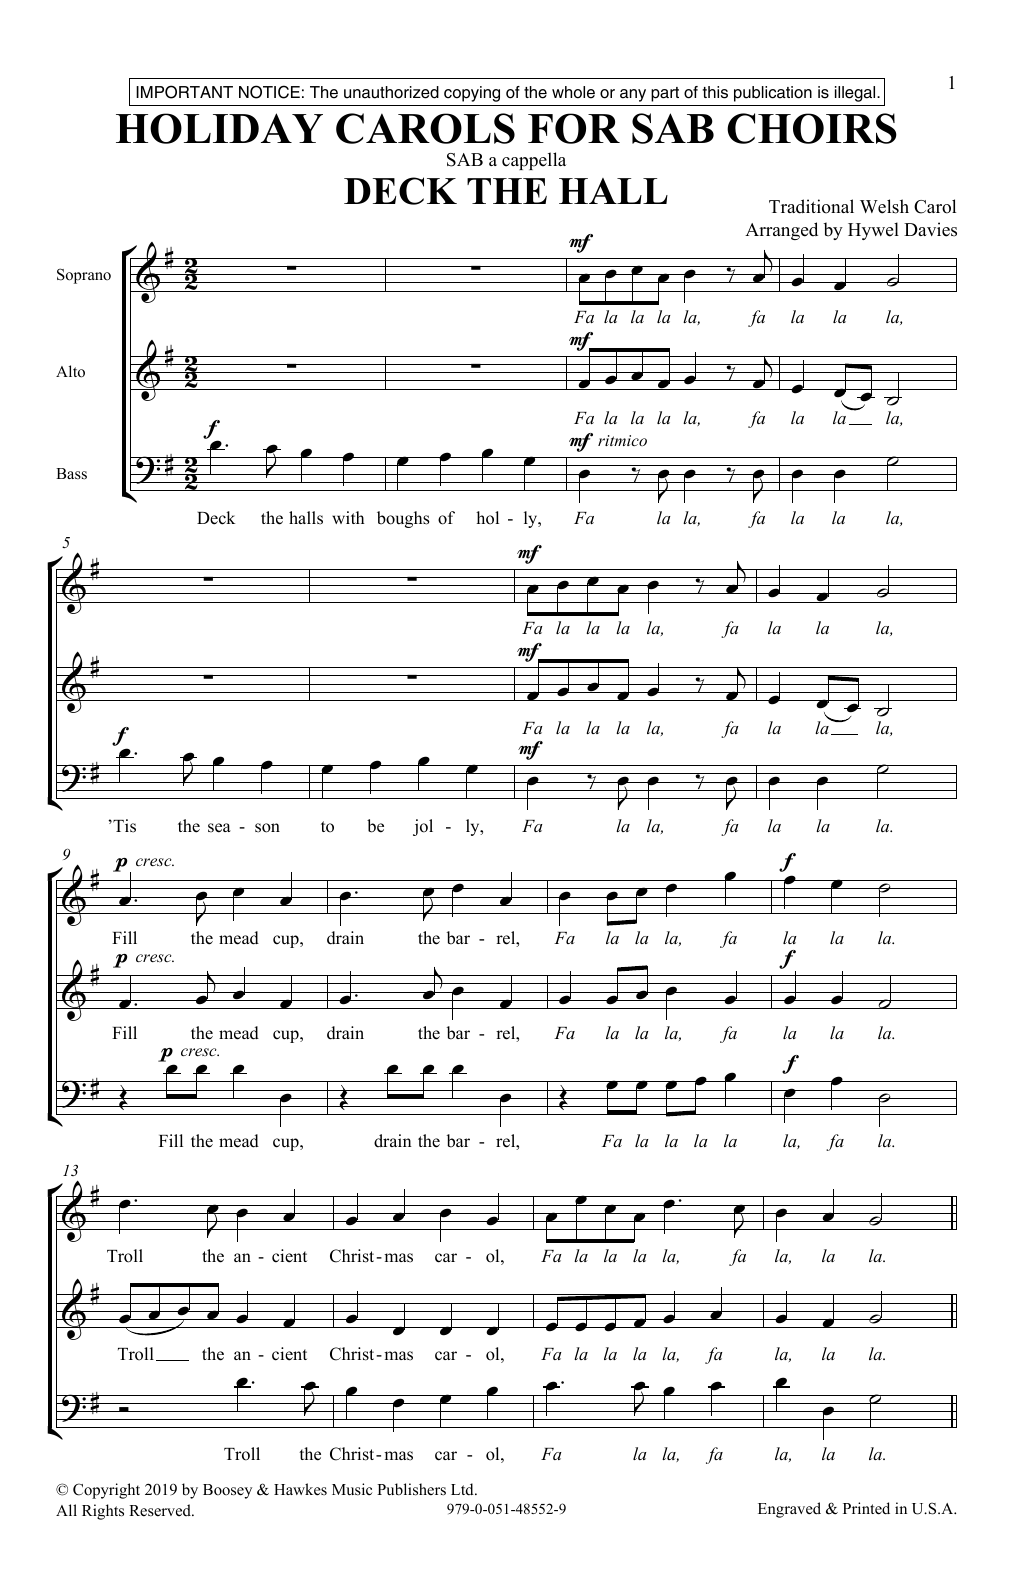 Hywel Davies Holiday Carols for SAB Choirs Sheet Music Notes & Chords for SAB Choir - Download or Print PDF